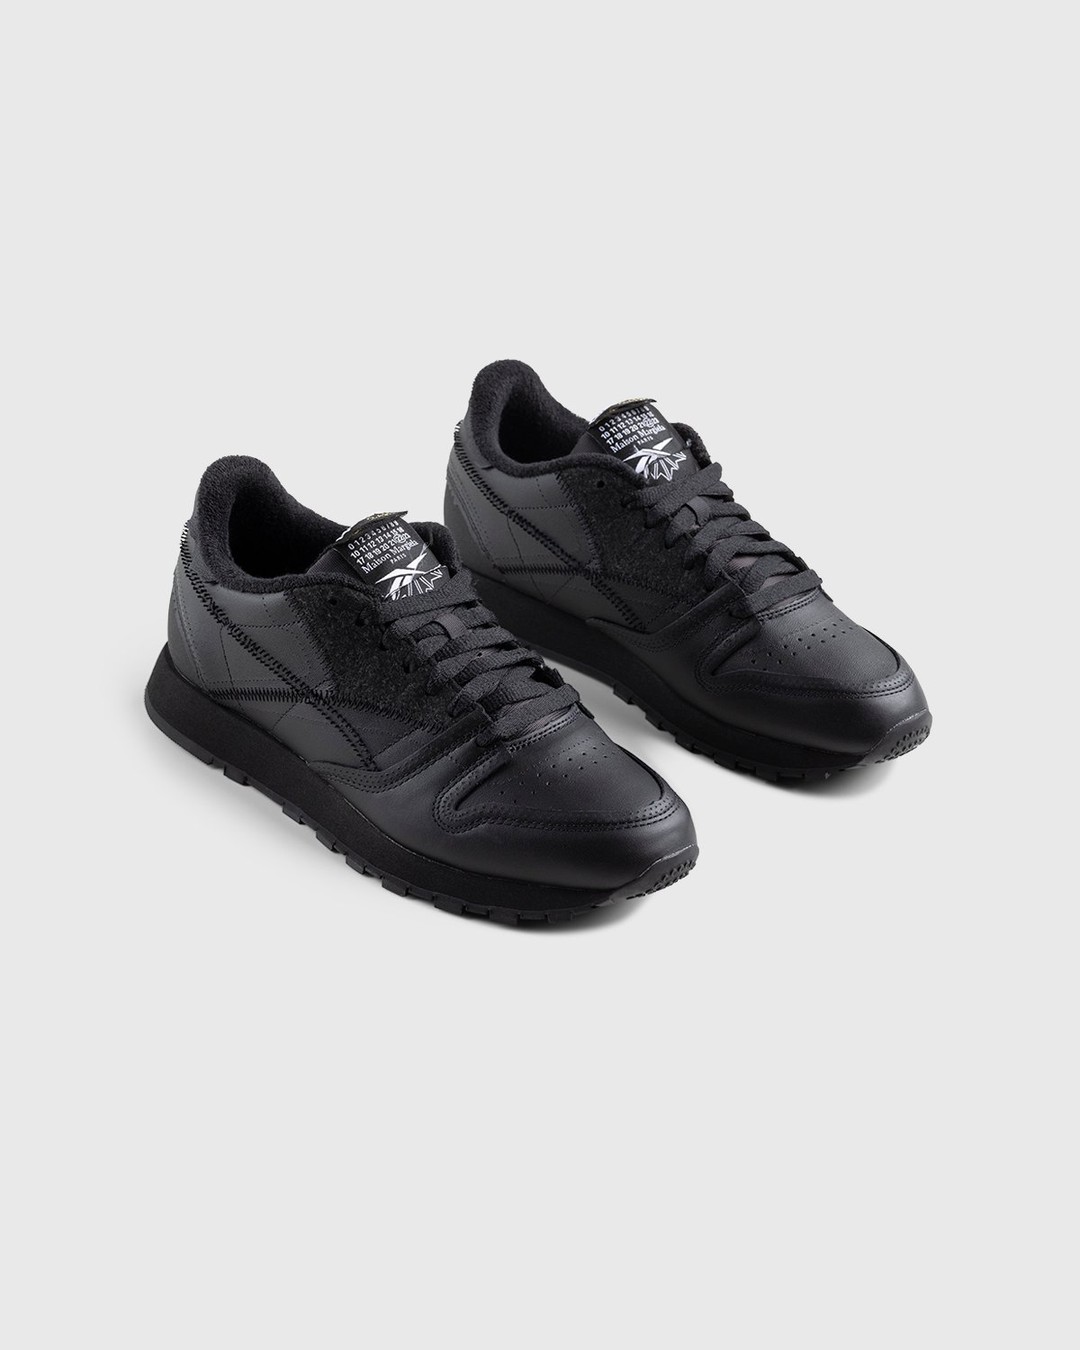 Maison Margiela x Reebok – Classic Leather Memory Of Black/Footwear  White/Black | Highsnobiety Shop